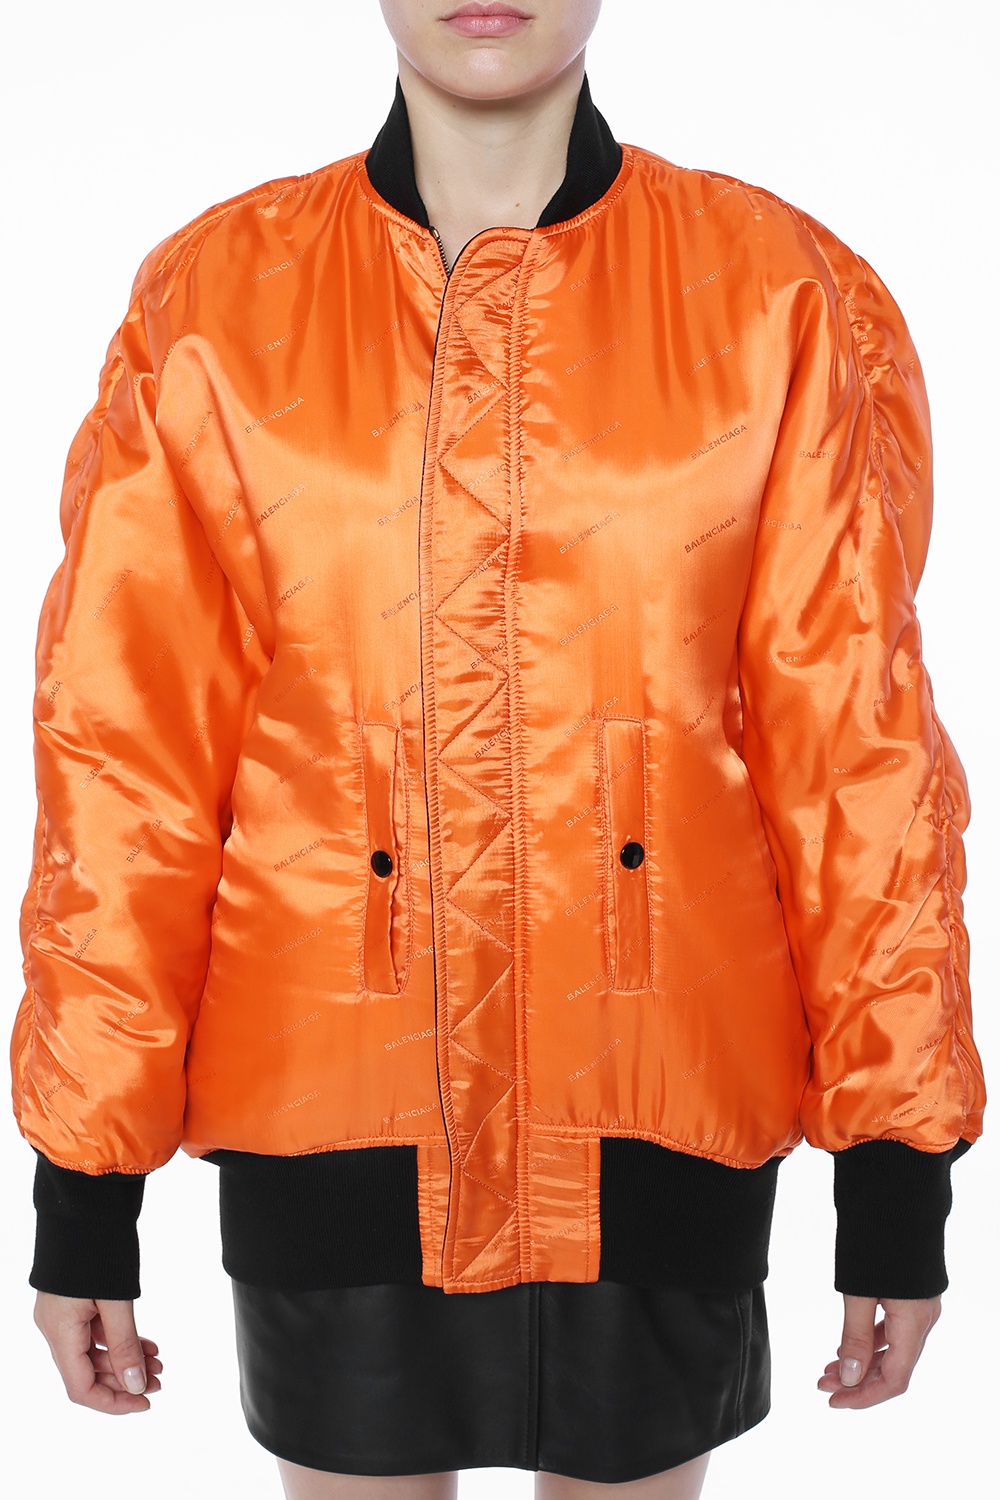 balenciaga jacket orange